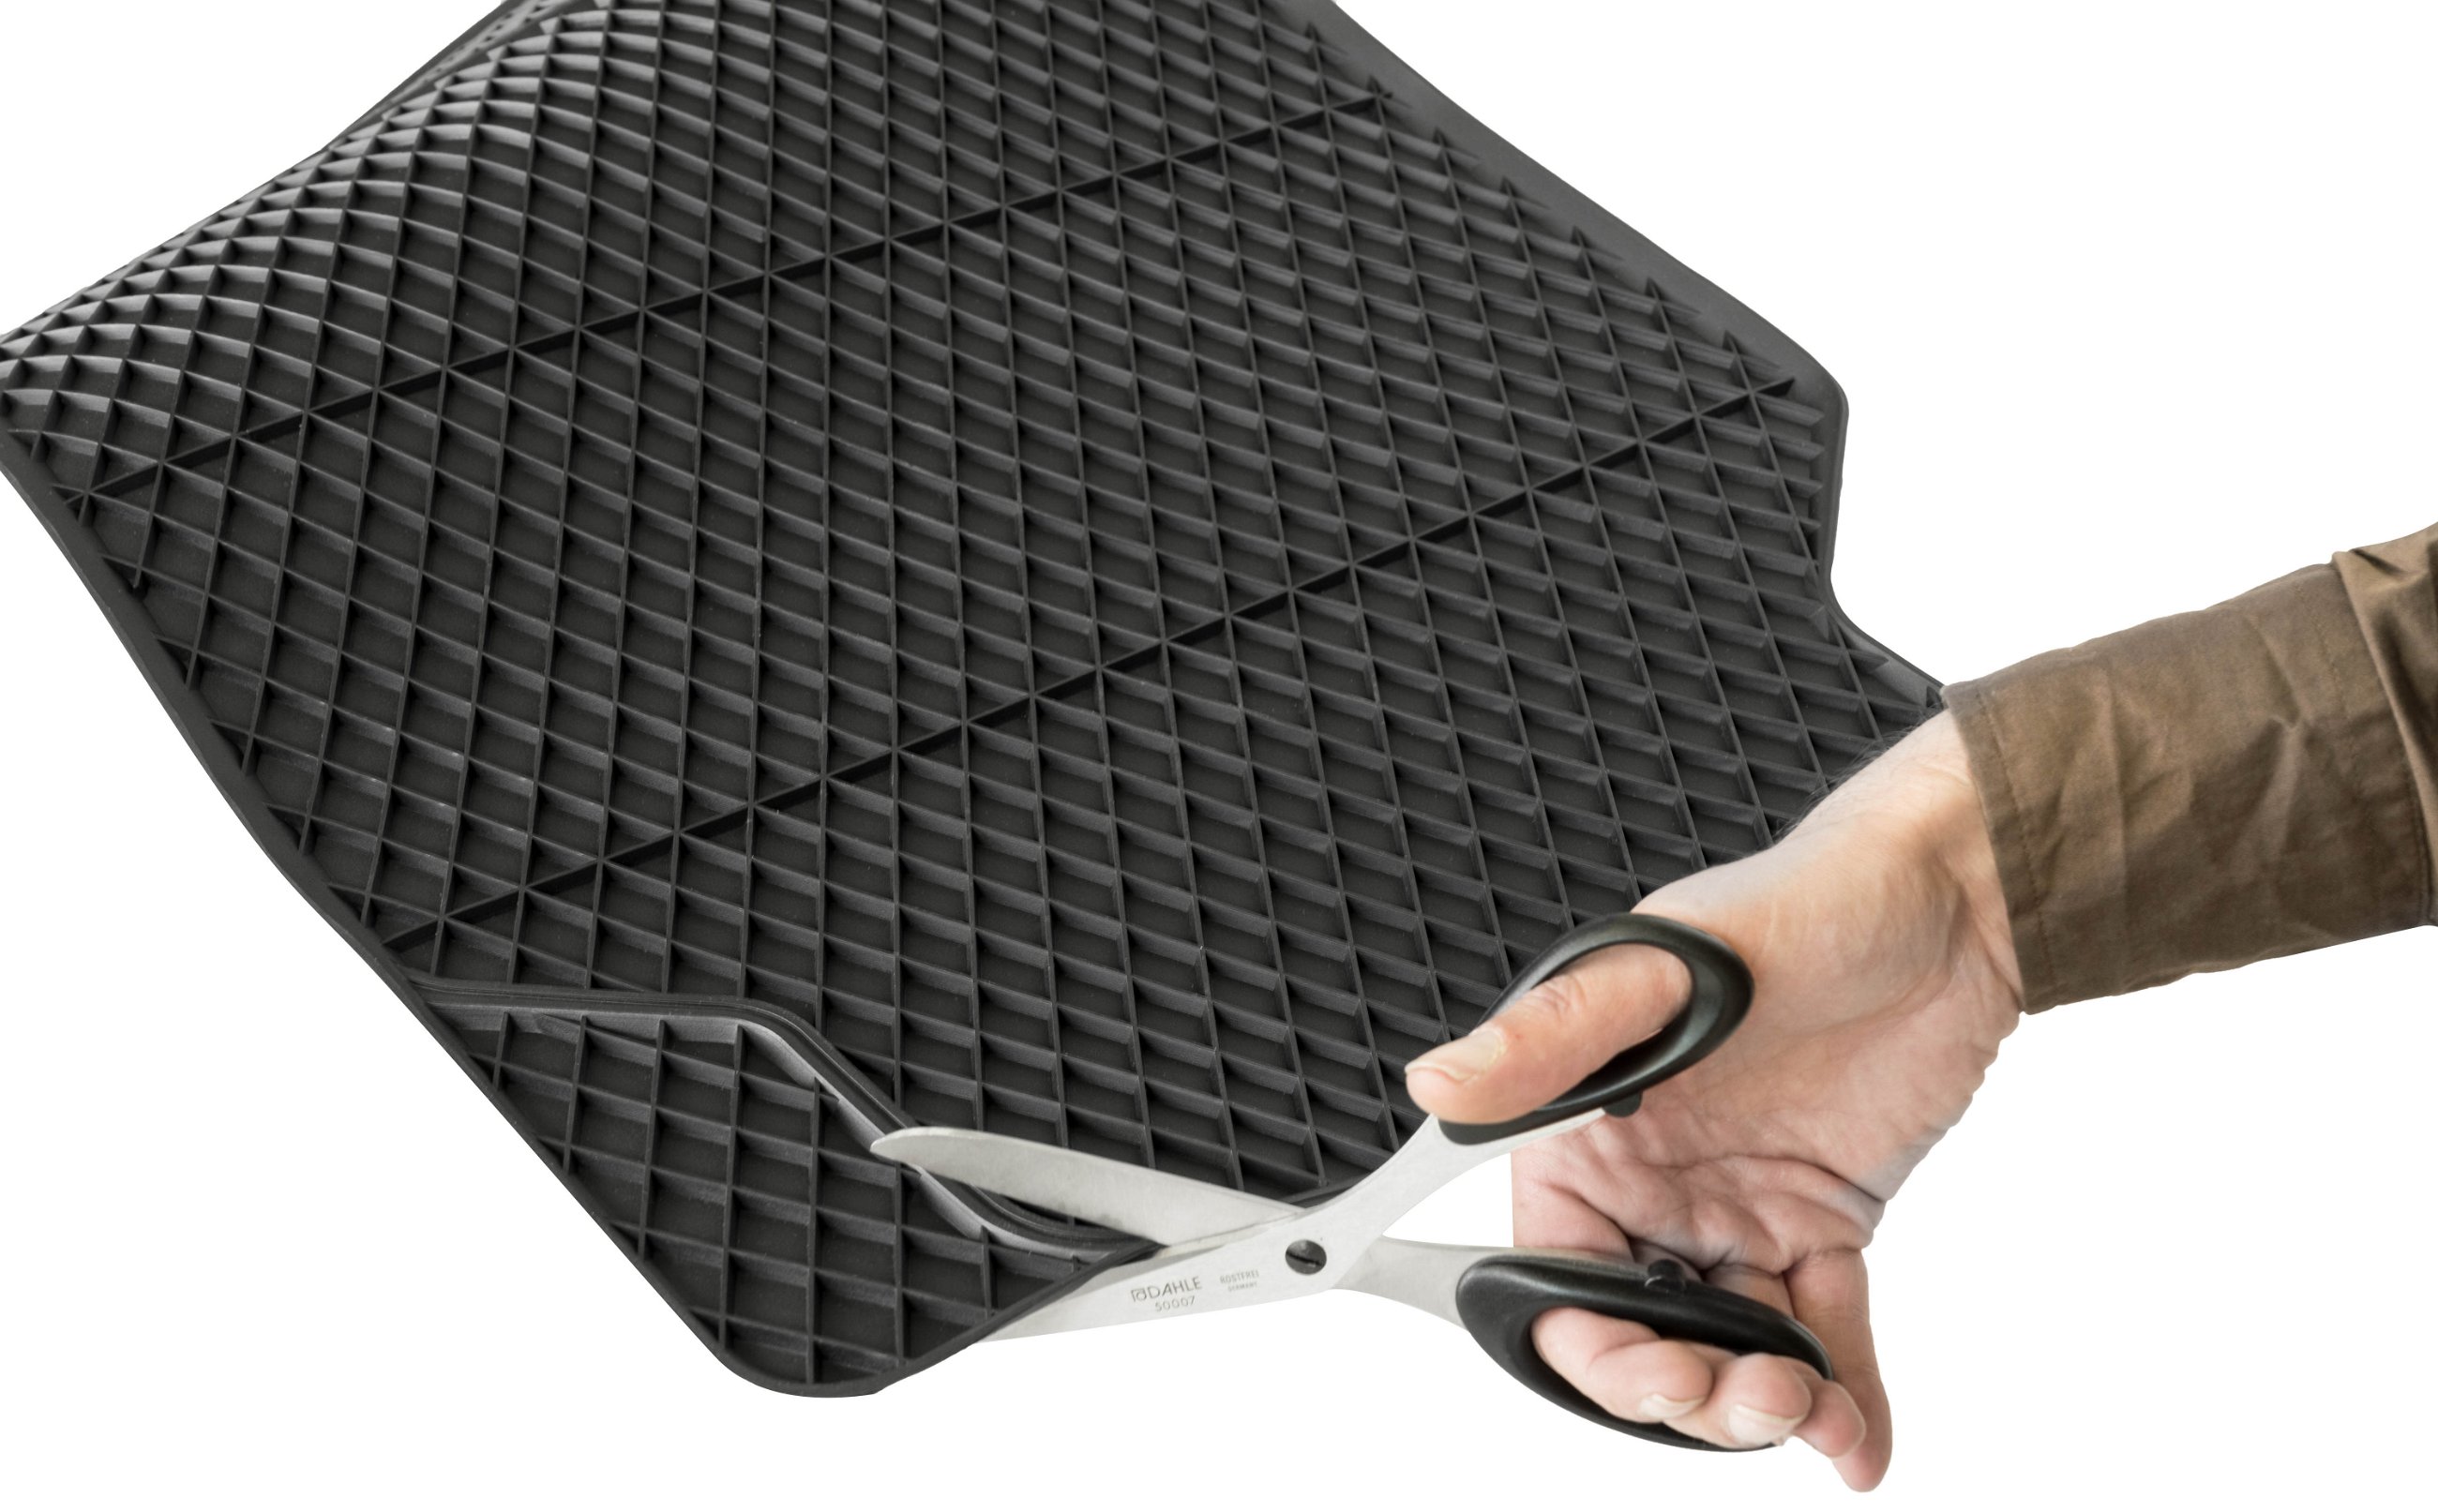 Rubber mats for Robust front mats black